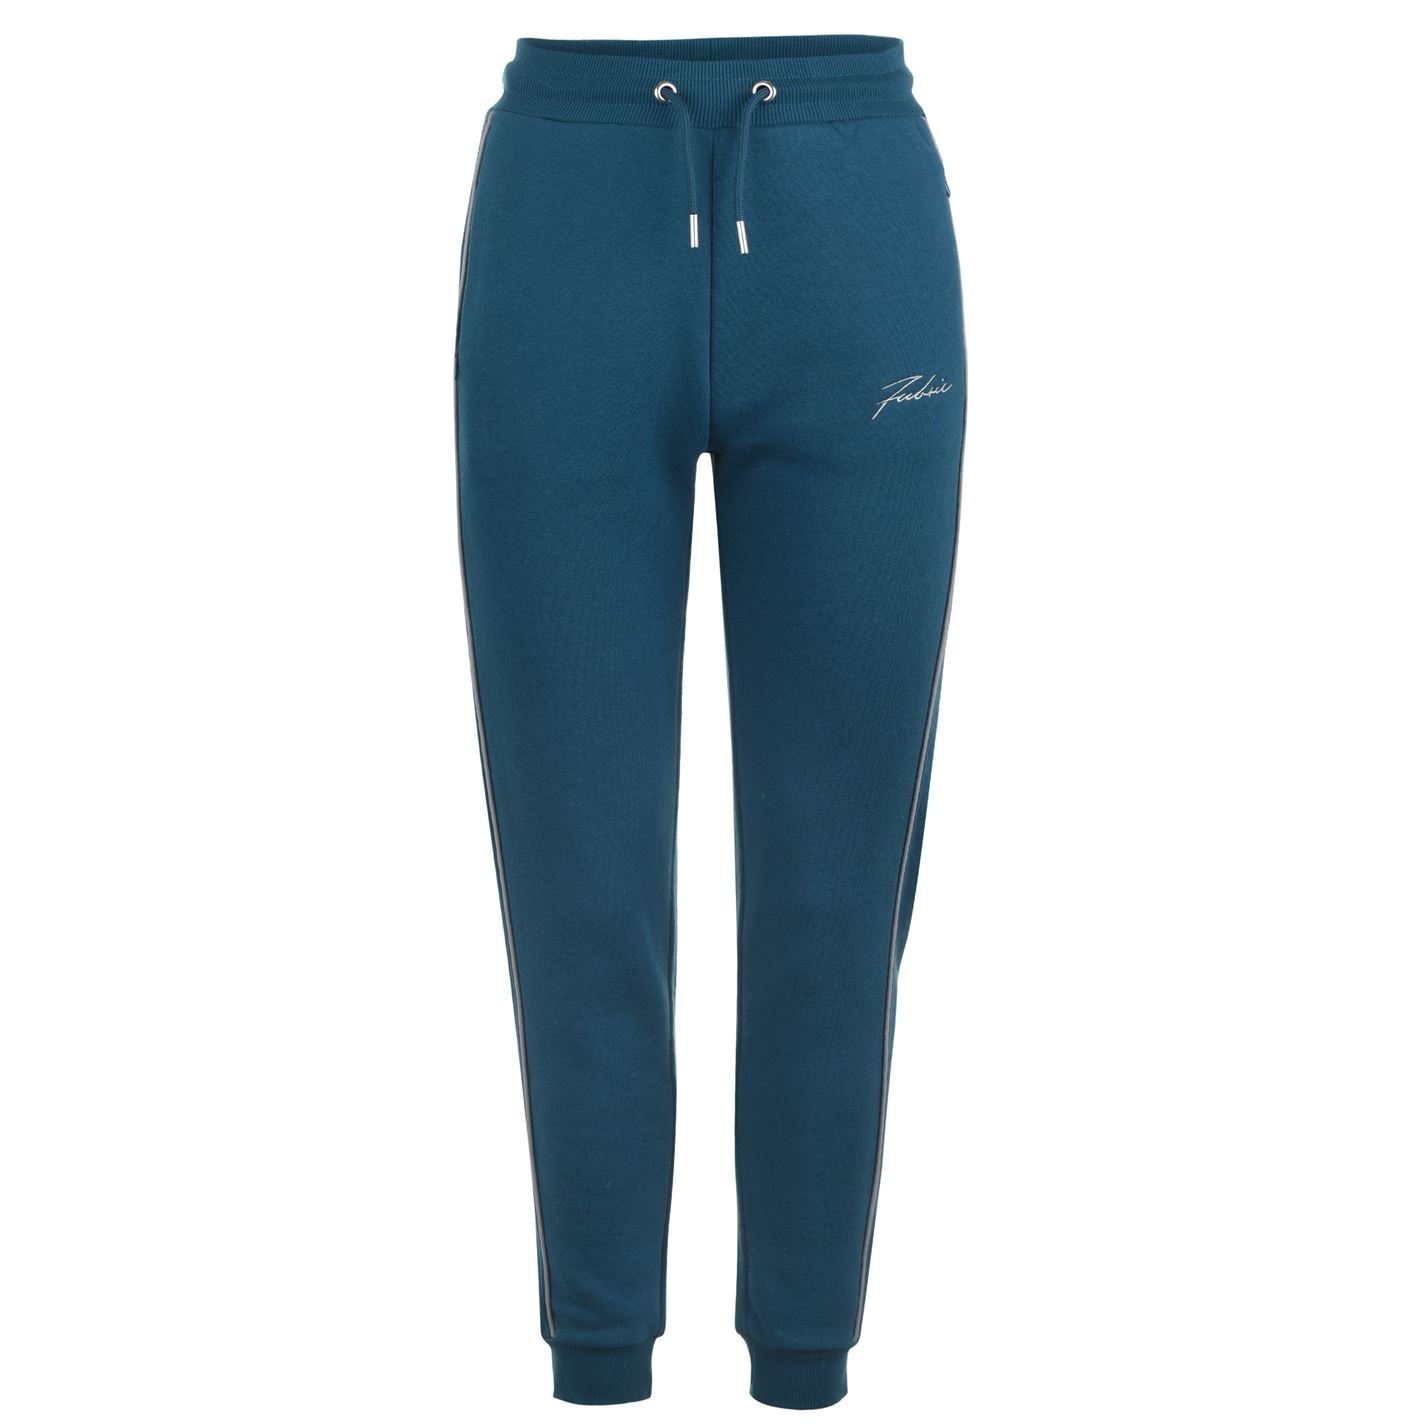 Pantaloni jogging Fabric Slim Piped pentru Femei bleu